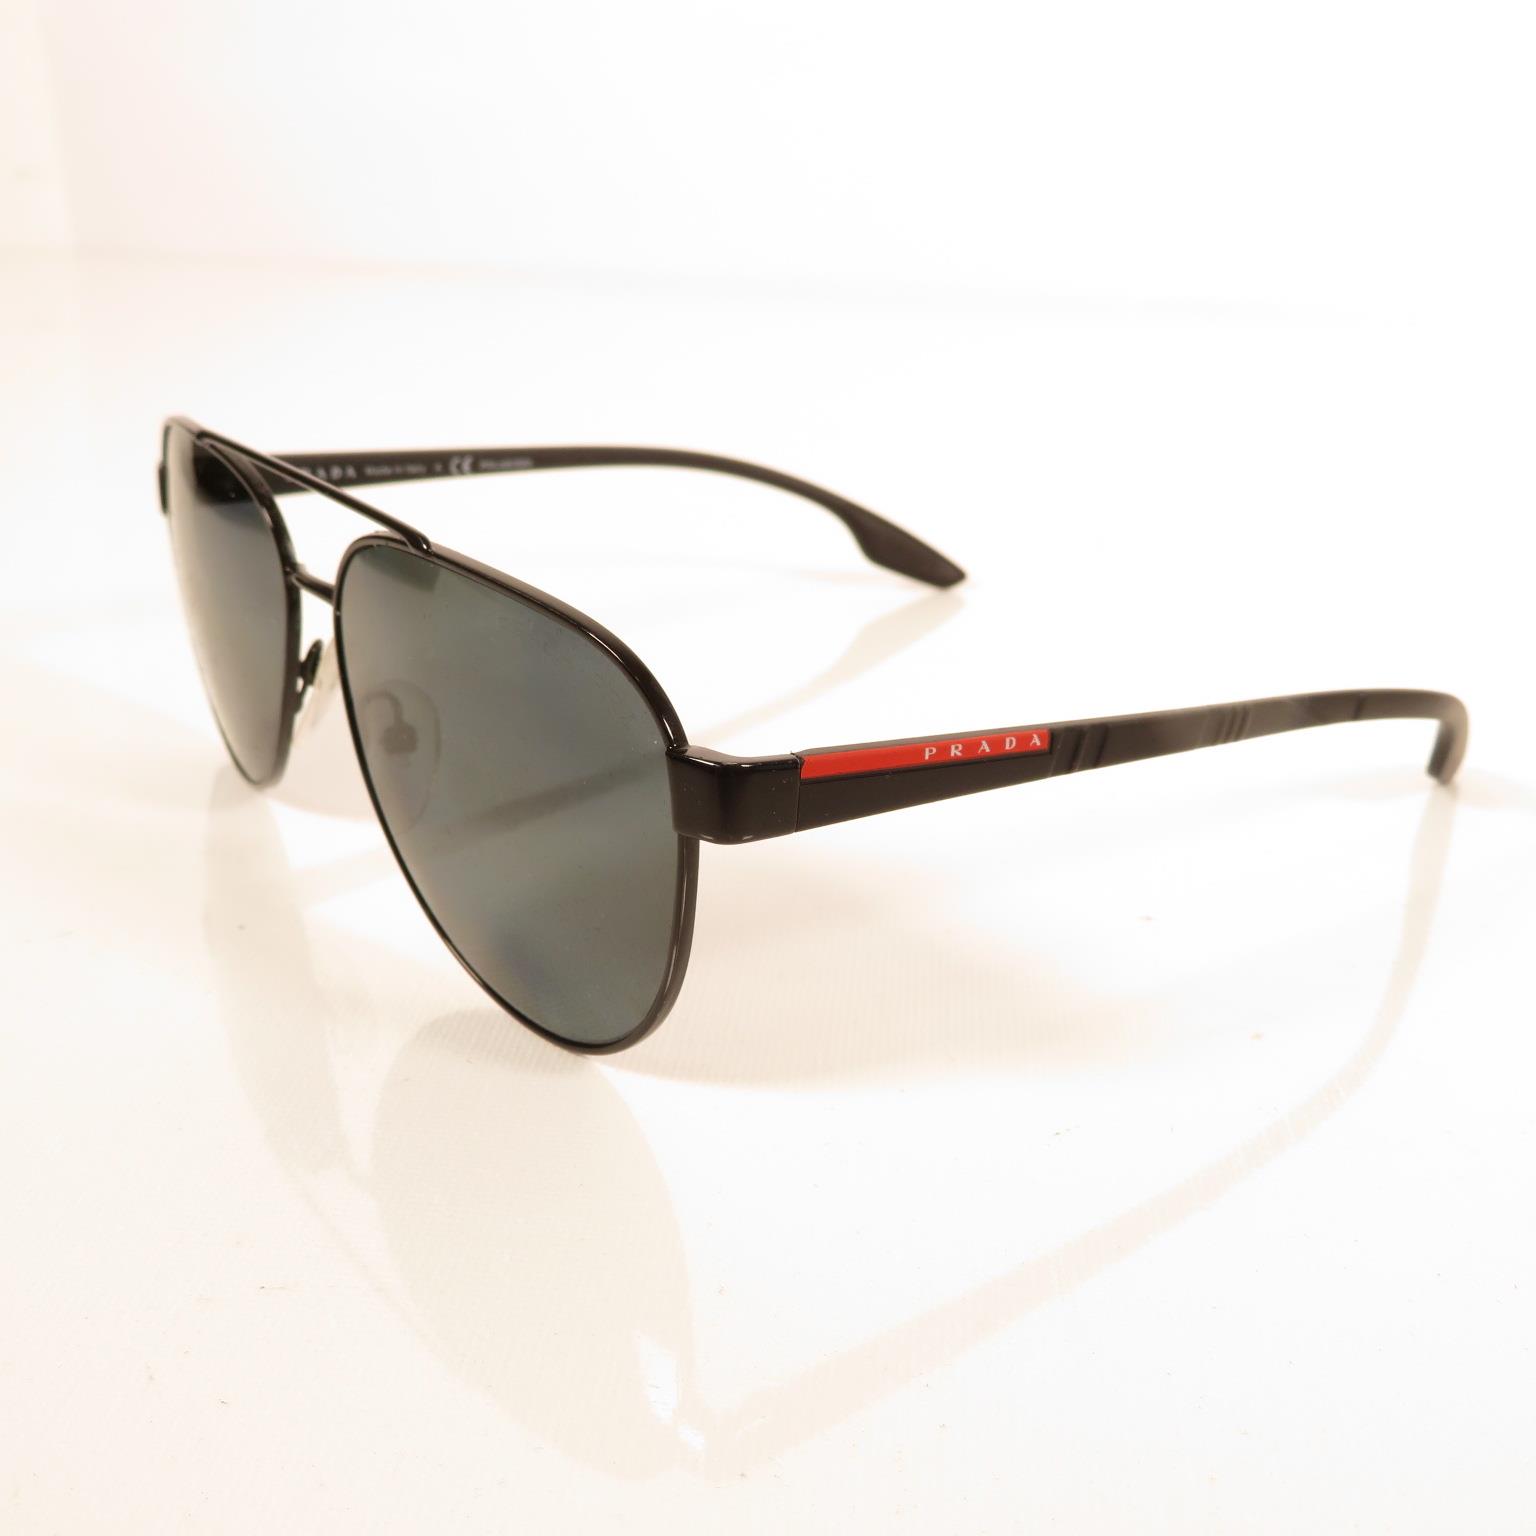 5x sets of Ray Ban sunglasses - - Image 8 of 23